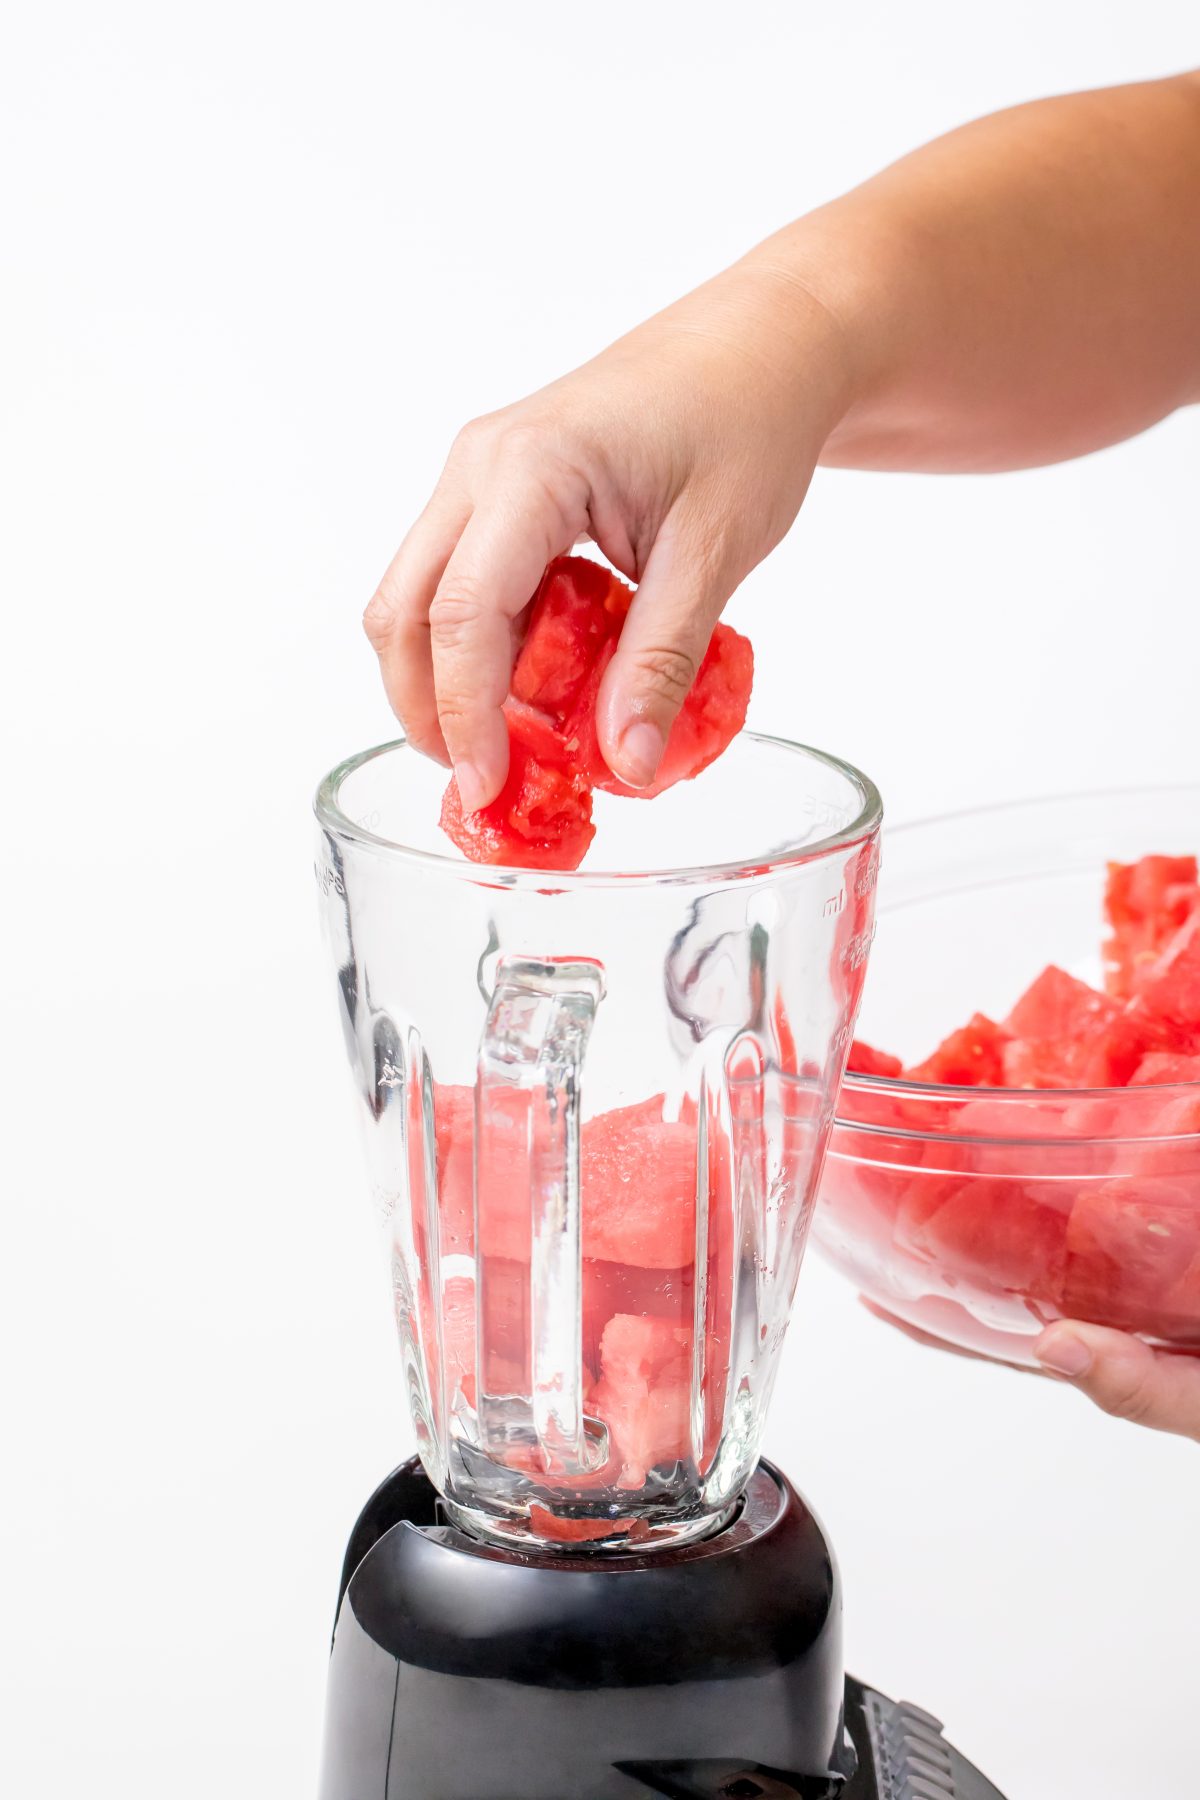 Add watermelon chunks to blender